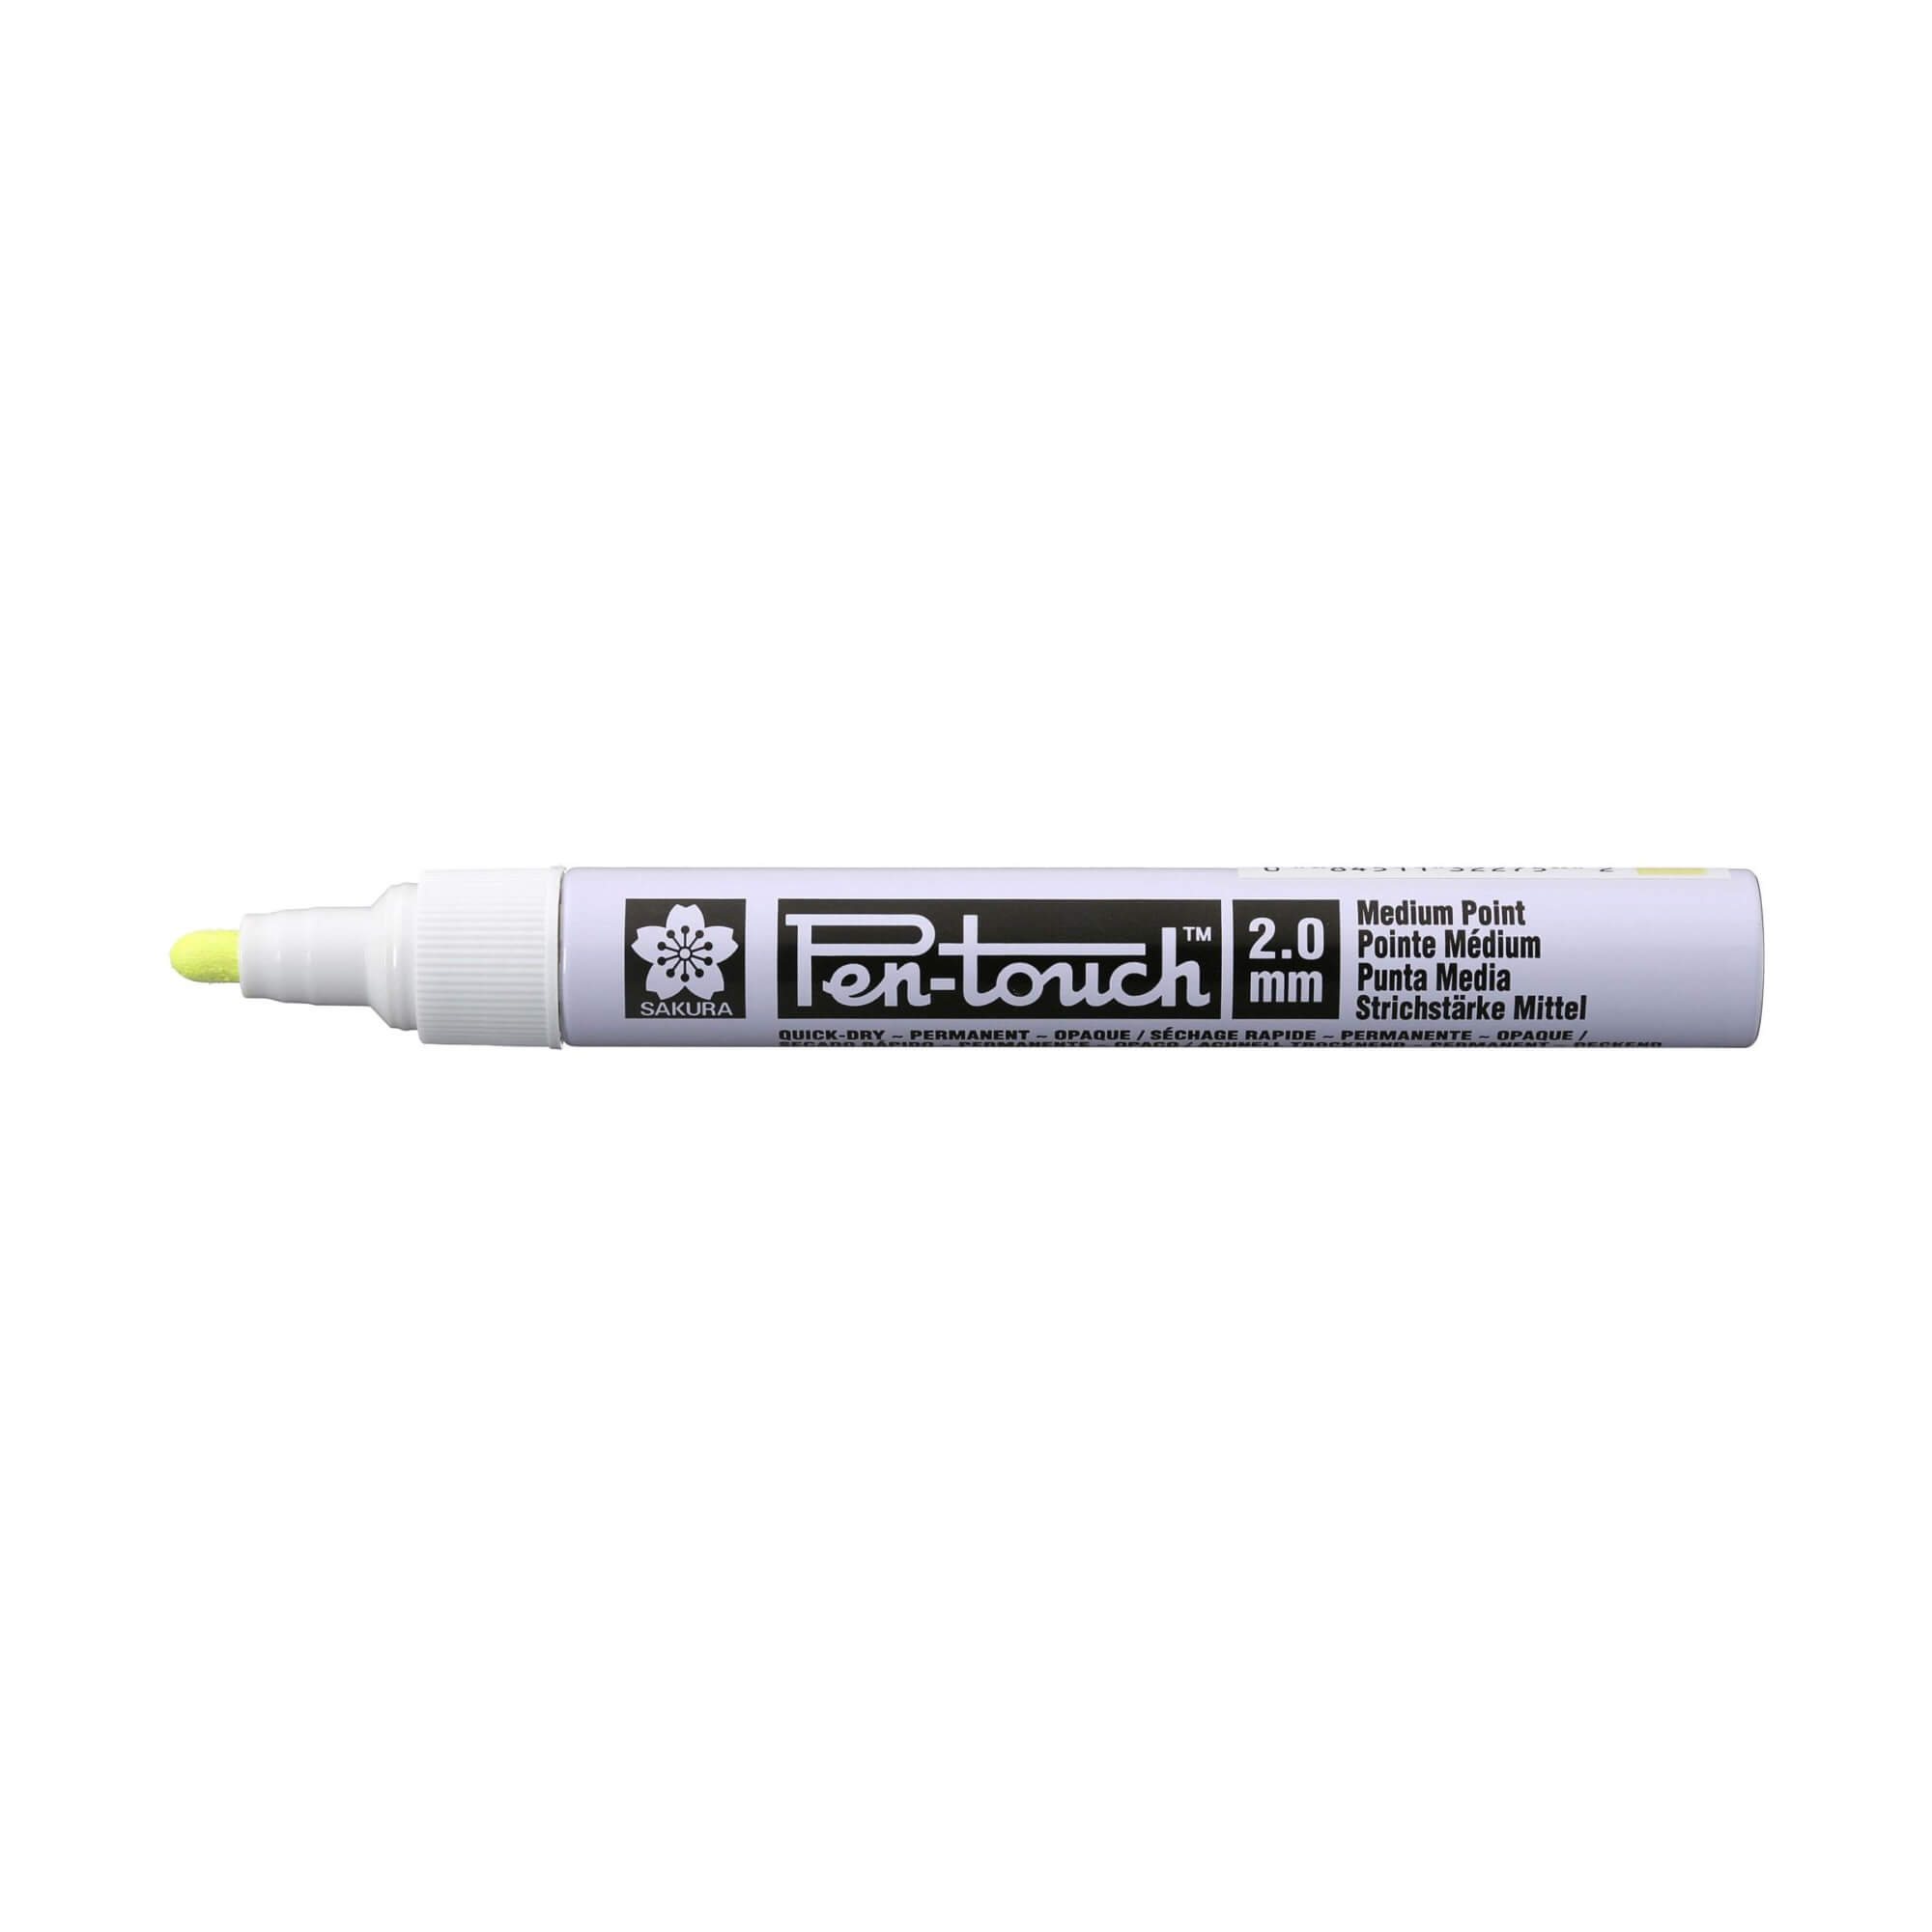 Sakura Pen-touch Fine Tip Fluorescent 4-Pack